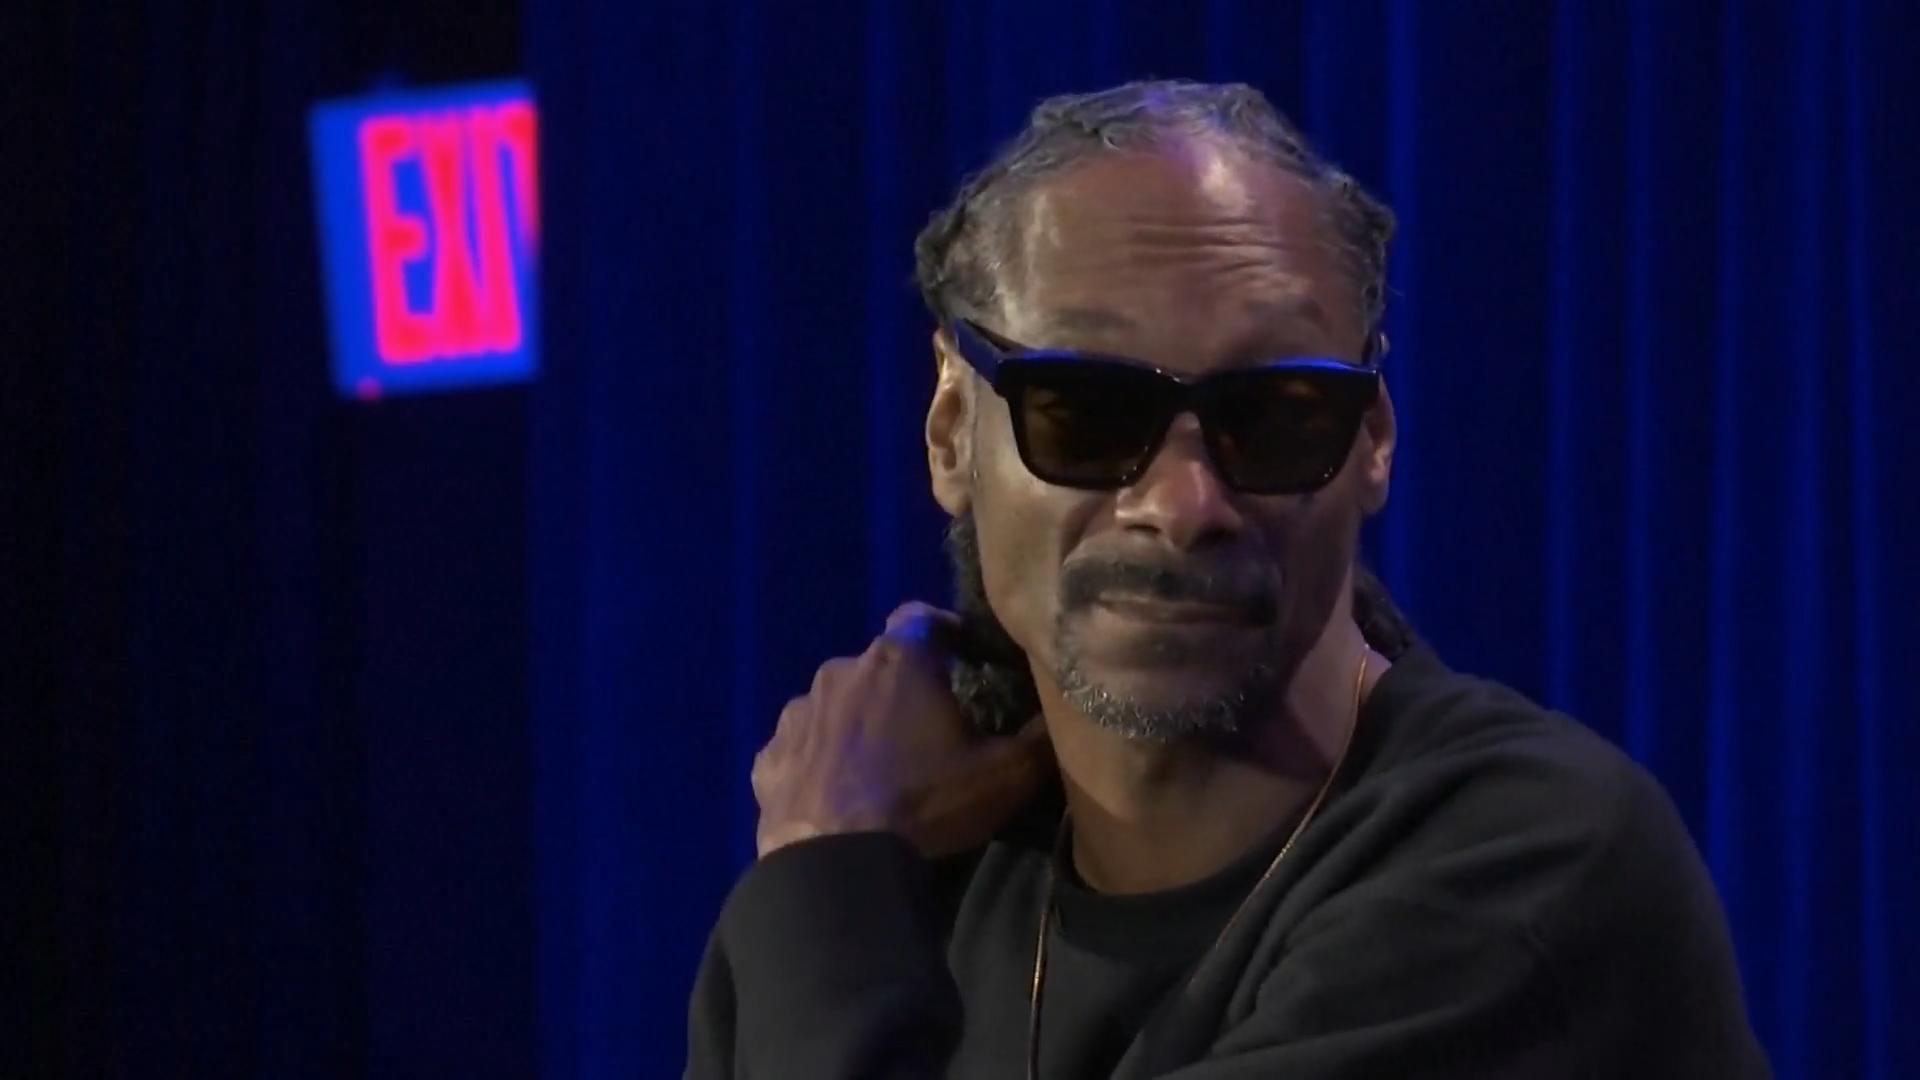 Schwere Missbrauchs-Vorwürfe gegen den Rapper Snoop Dogg